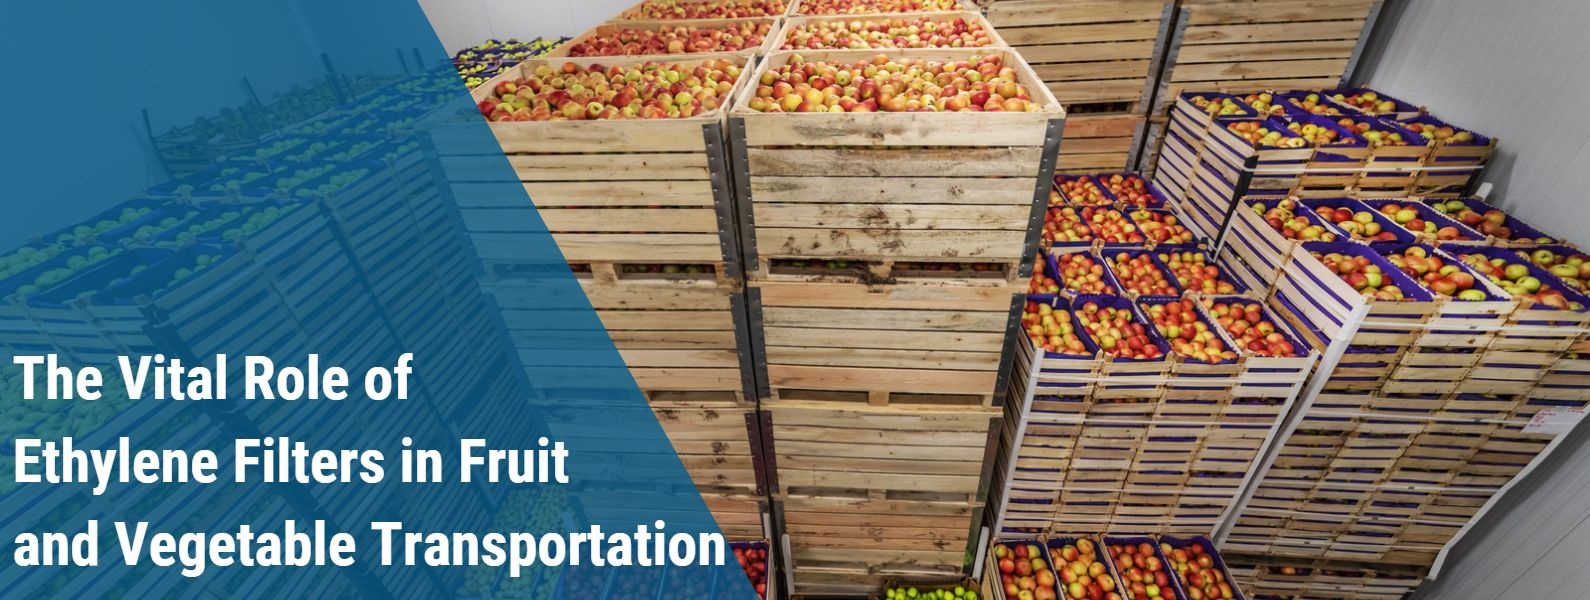 Enhancing Freshness: The Vital Role of Ethylene Filters in Fruit and Vegetable Transportation